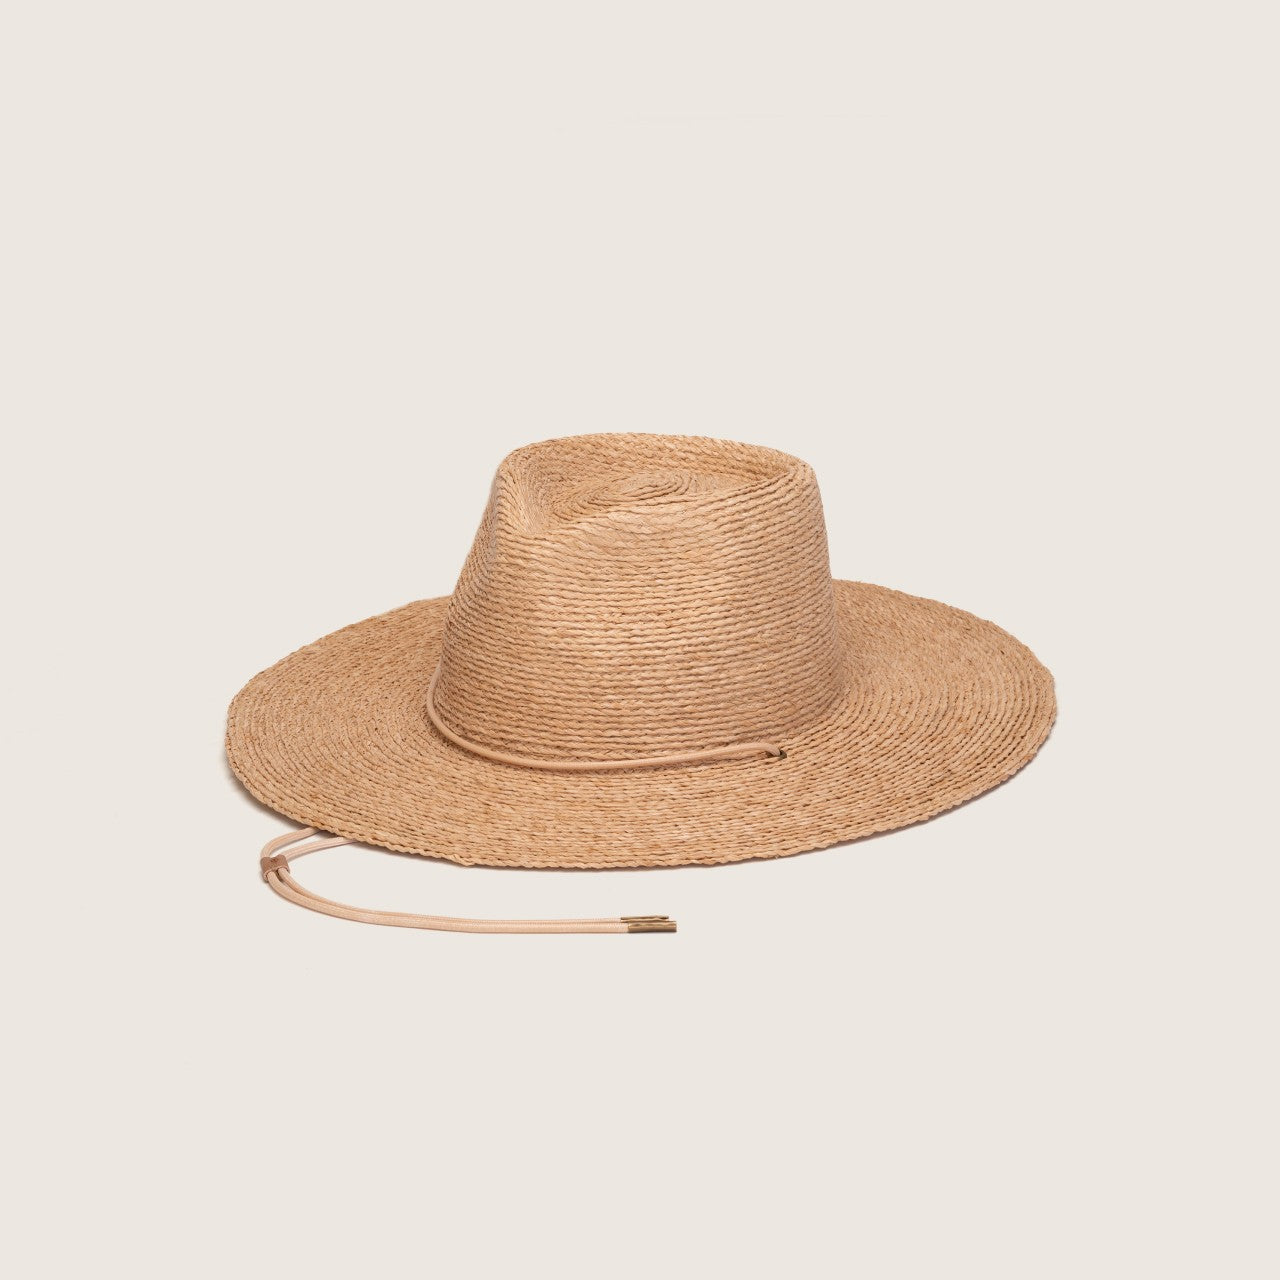 Austin Sand raffia hat front view